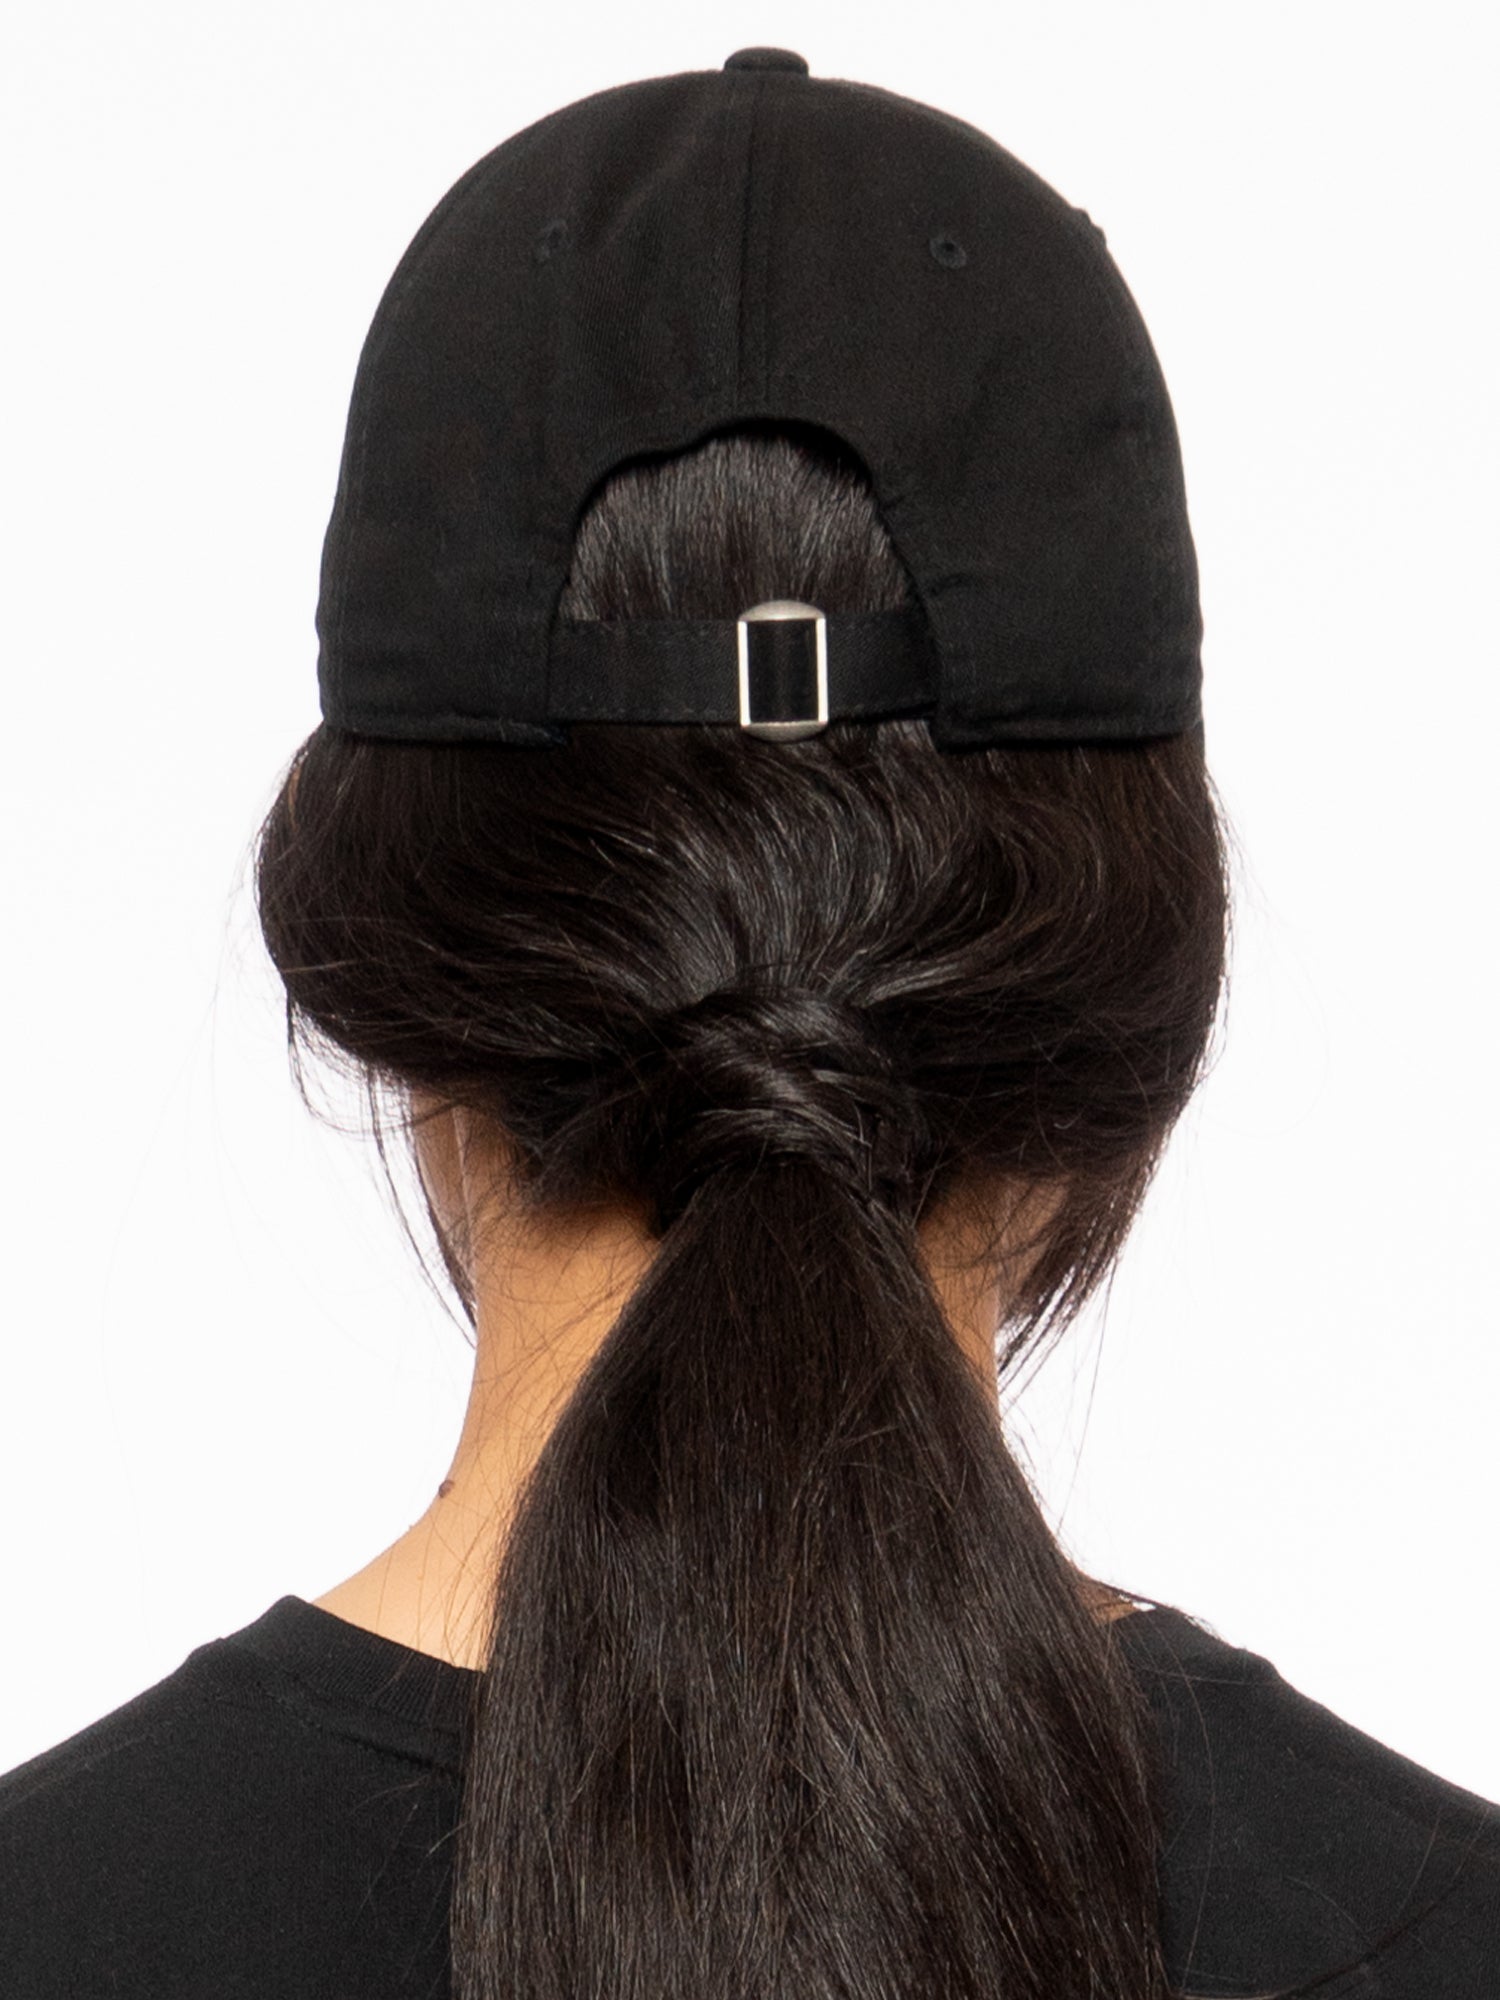 rosin studios logo embroidered dad hat baseball cap black